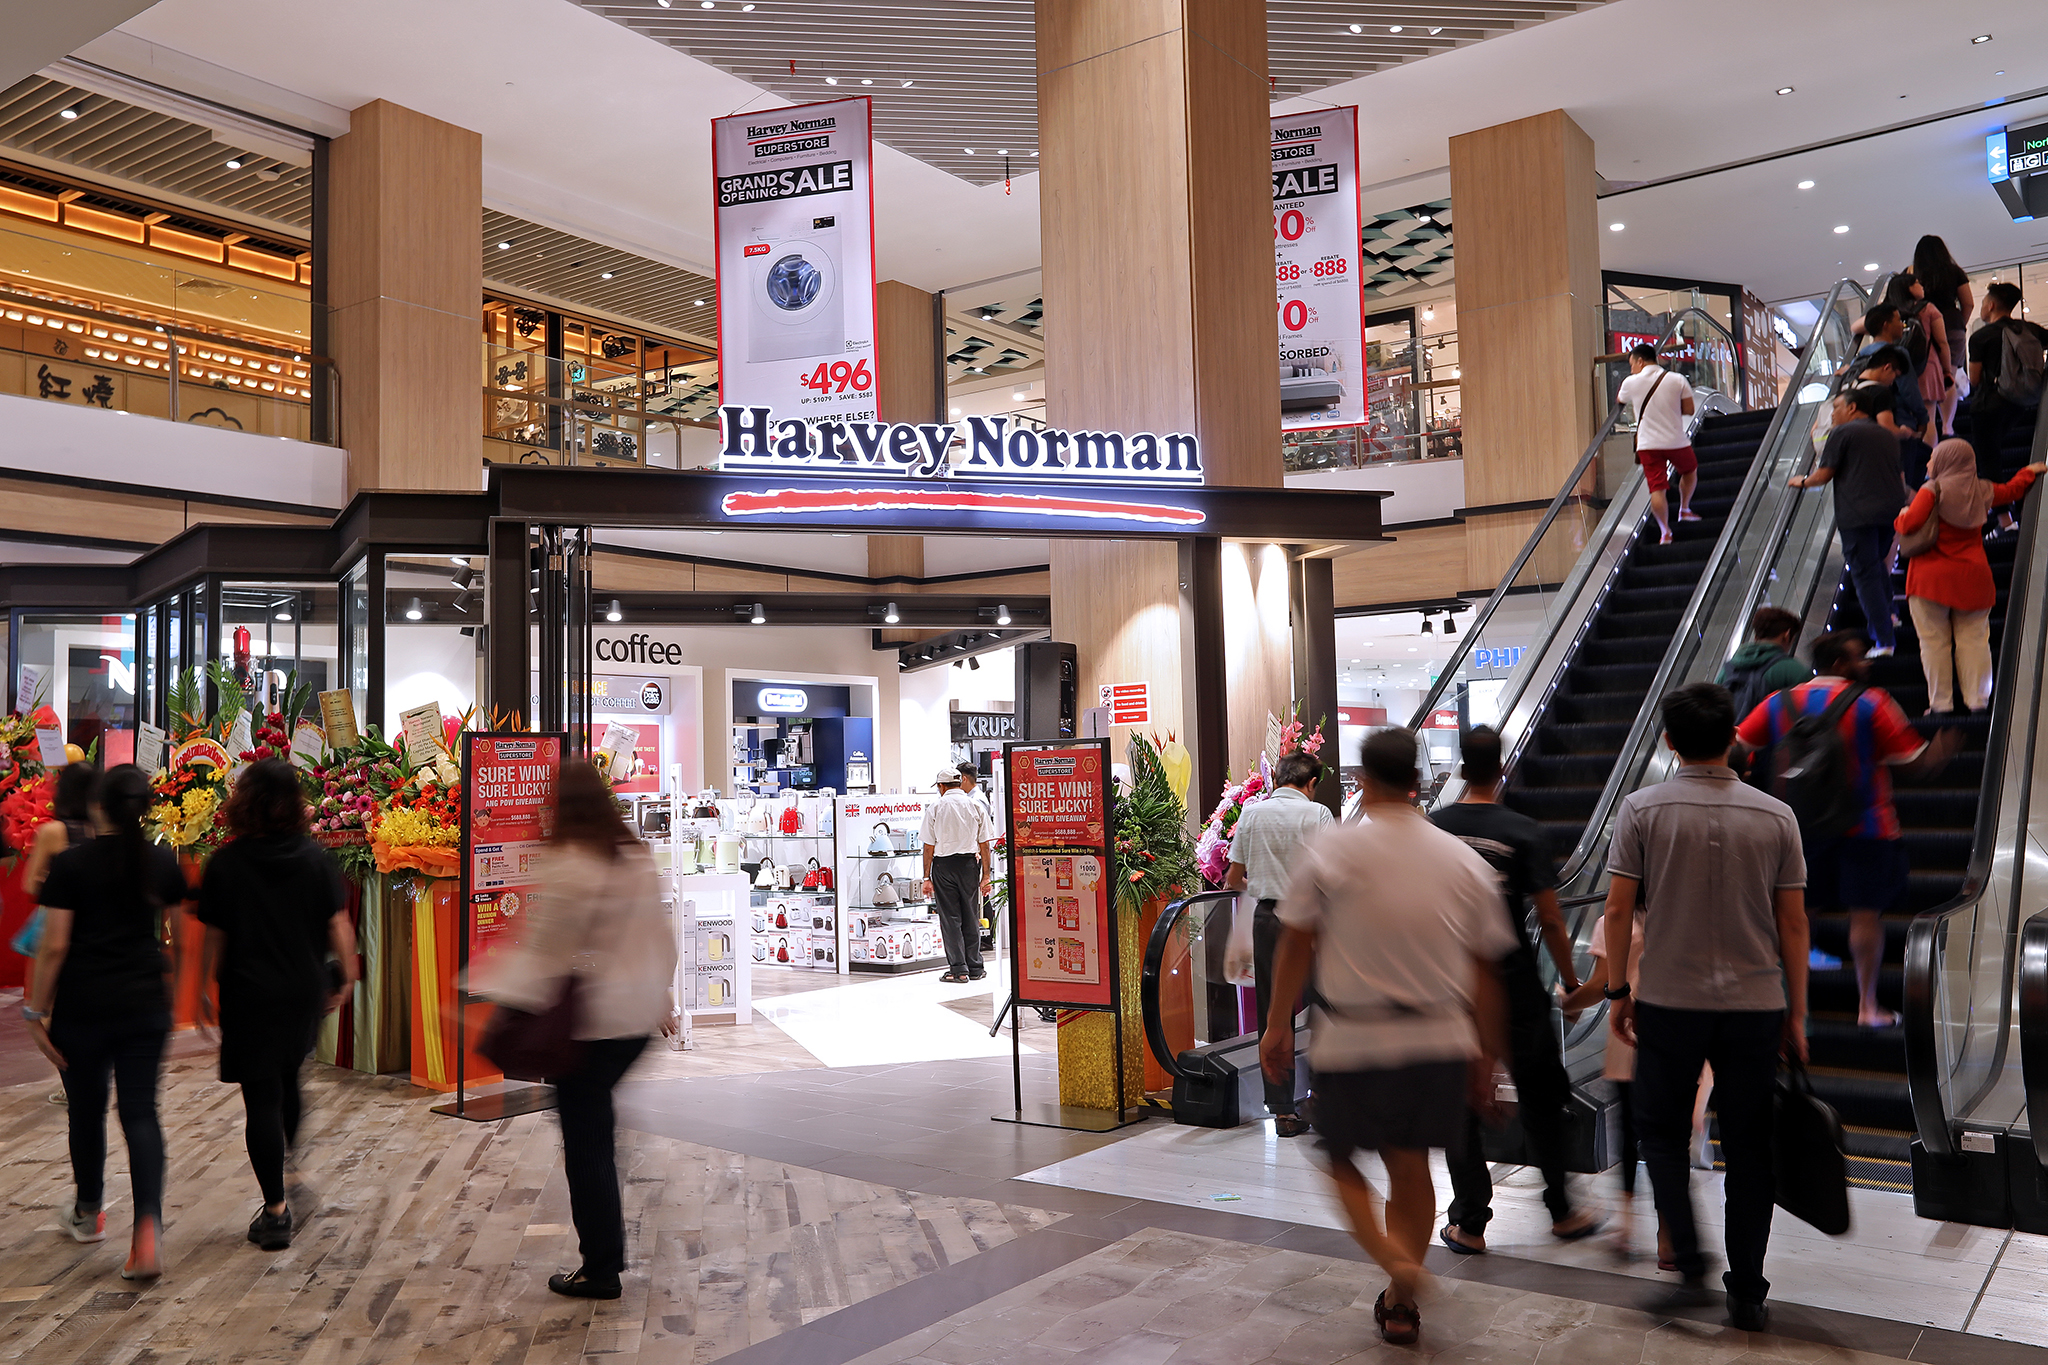  Harvey Norman’s new duplex spans 34,000 square feet